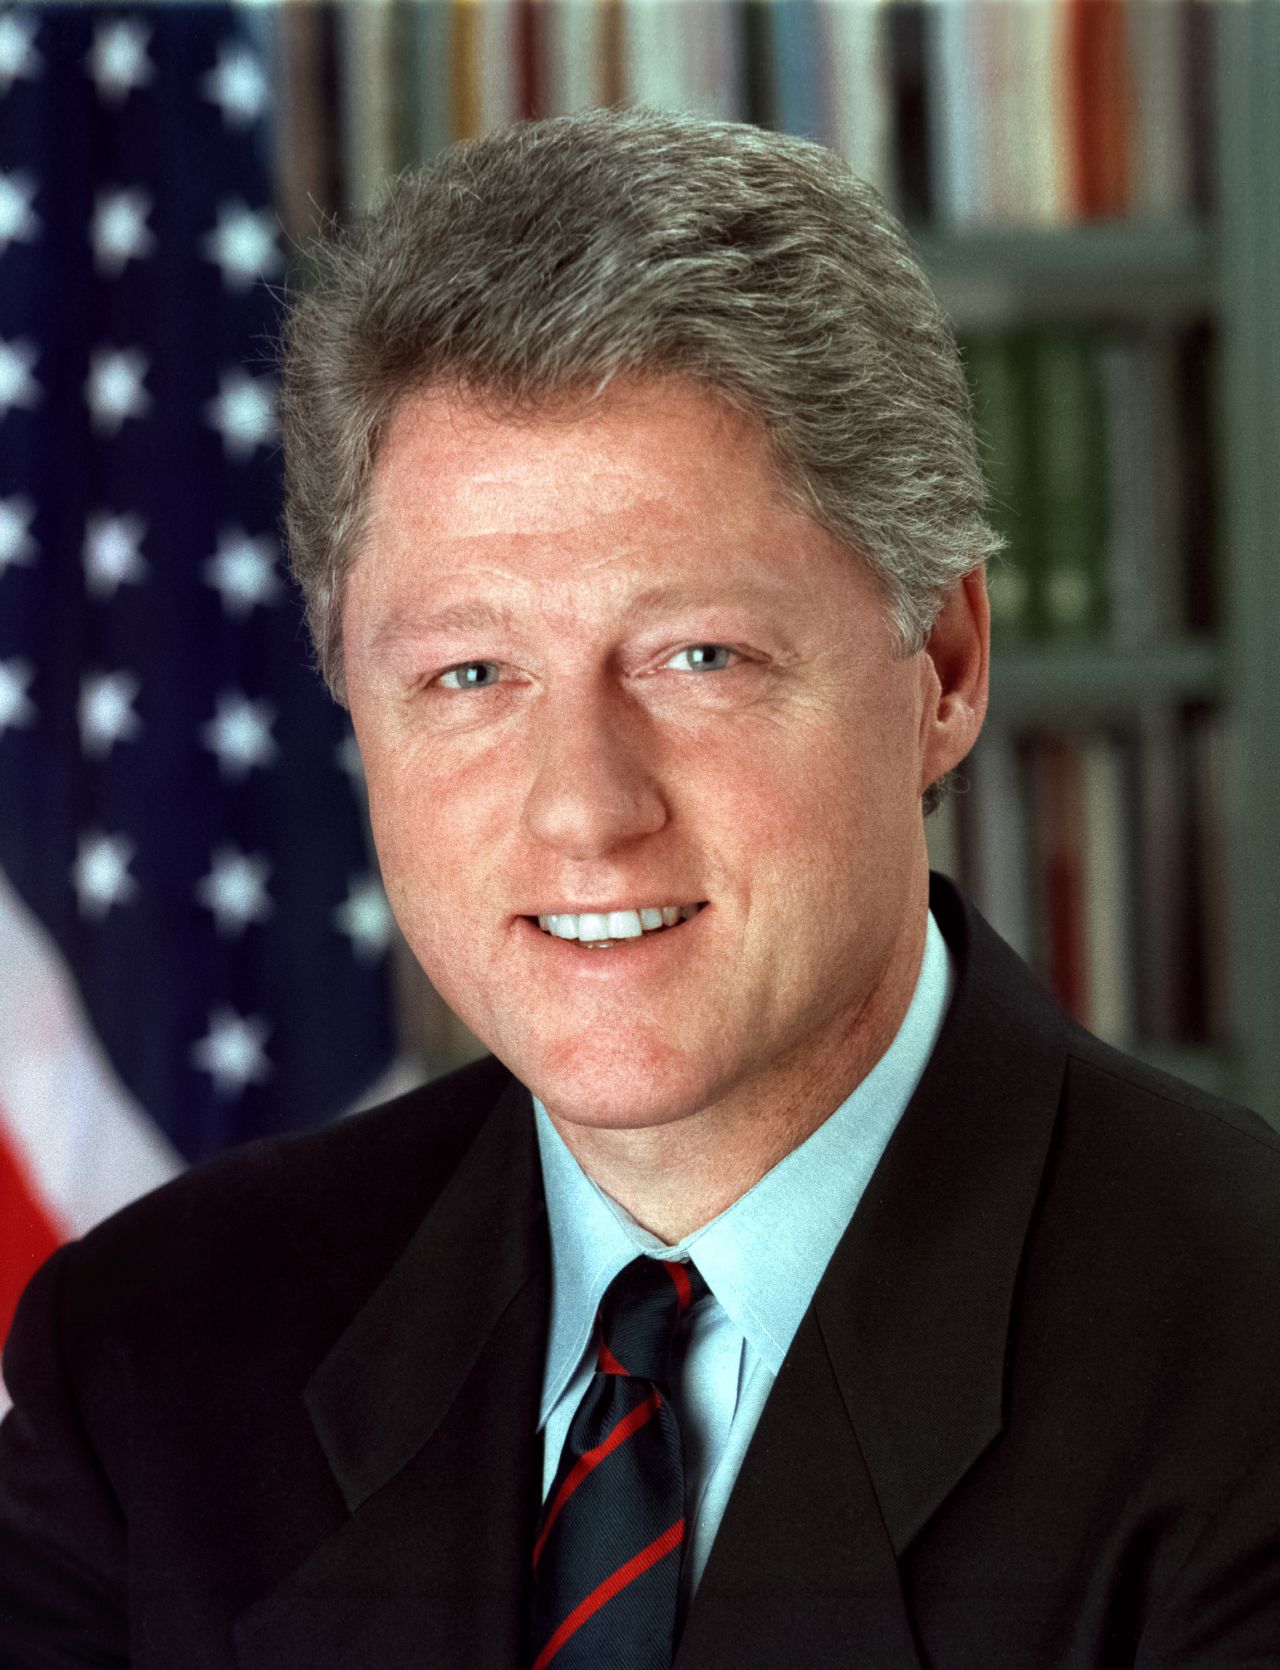 Bill Clinton, offizielles Porträt des ehemaligen US-Präsidenten im Weißen Haus.